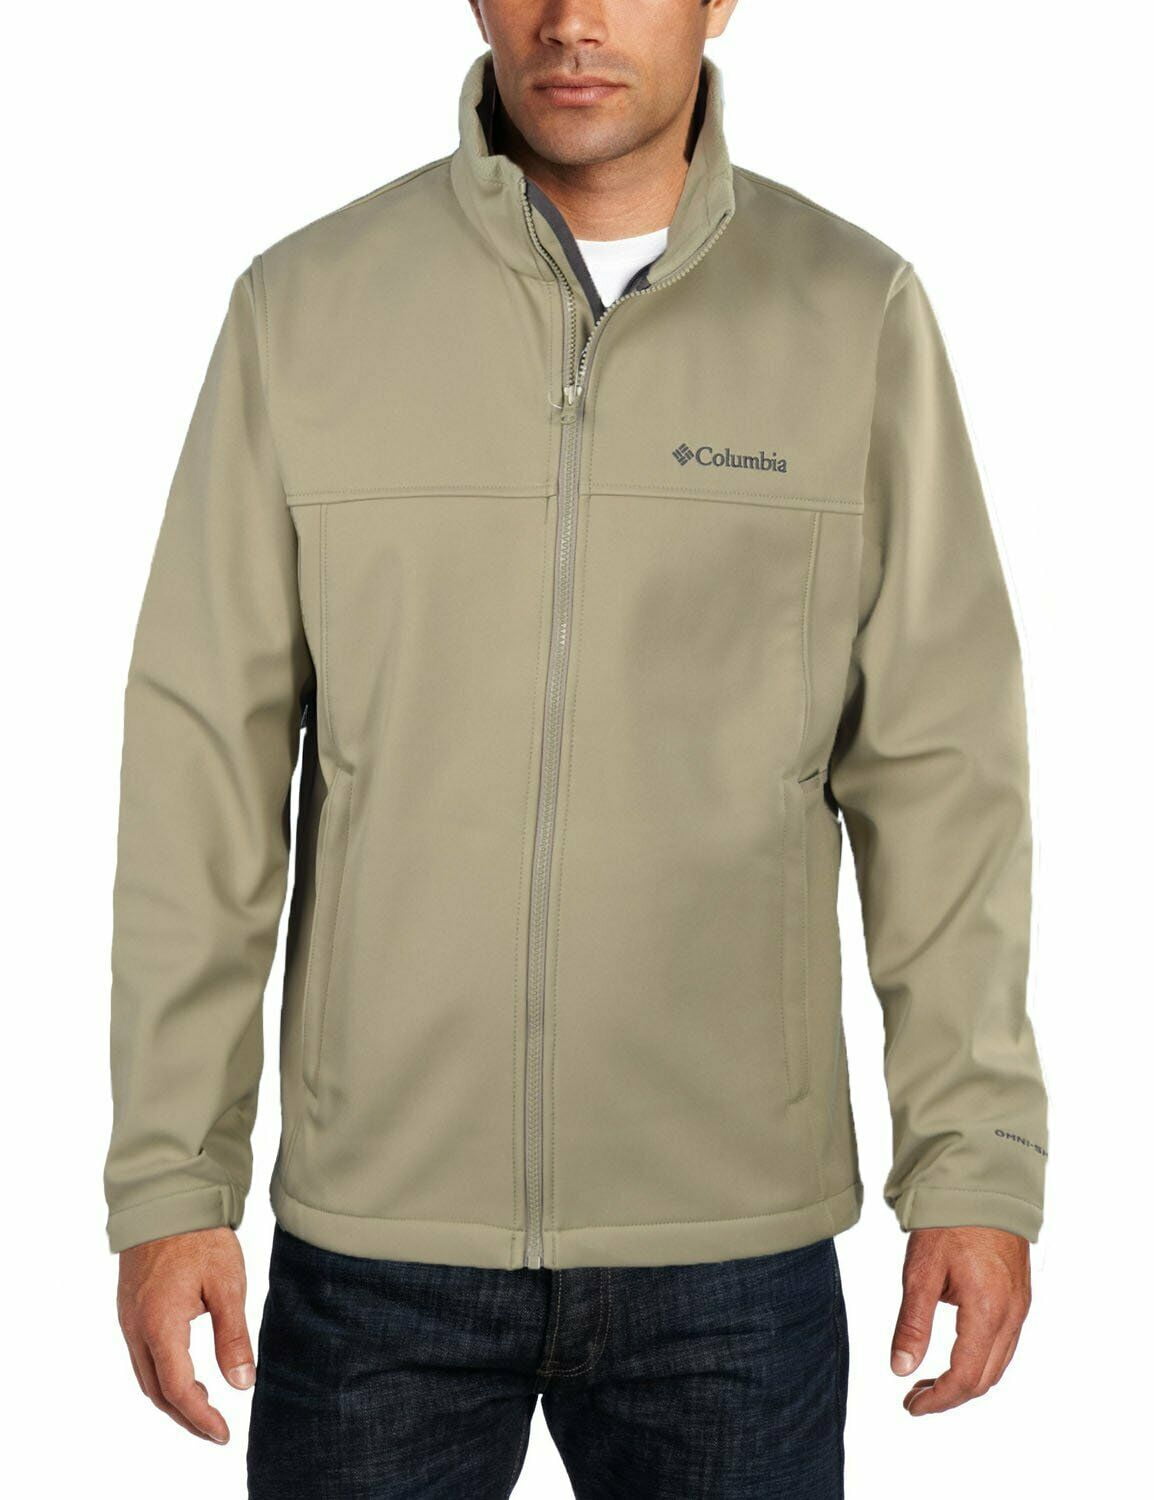 Columbia Men's Mt. Village Softshell Jacket Size 2X Model XX6093-221